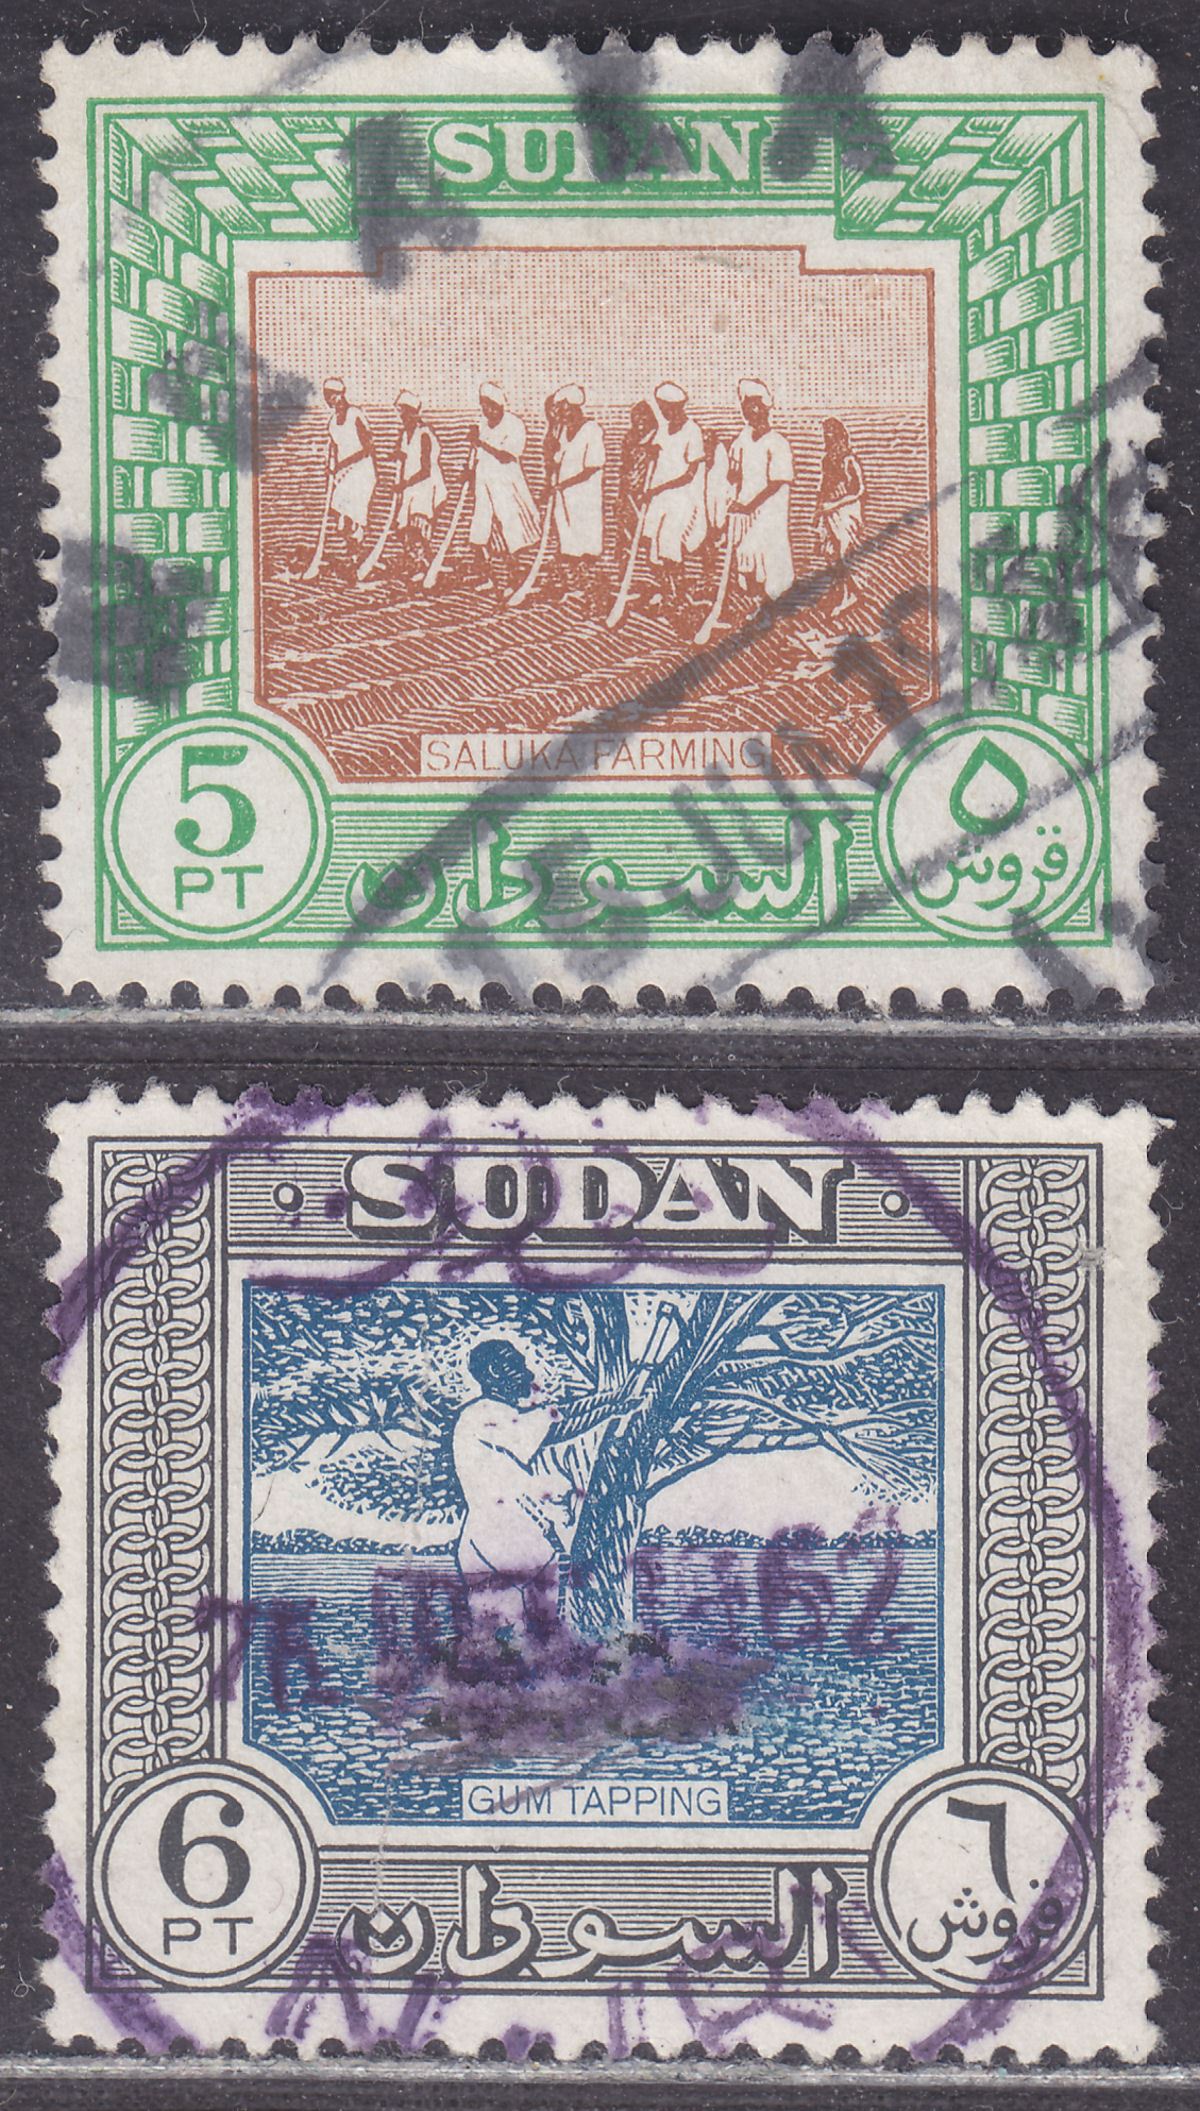 Sudan 1951 KGVI Pictorials 5p, 6p Used with NZARA, NURI Postmarks